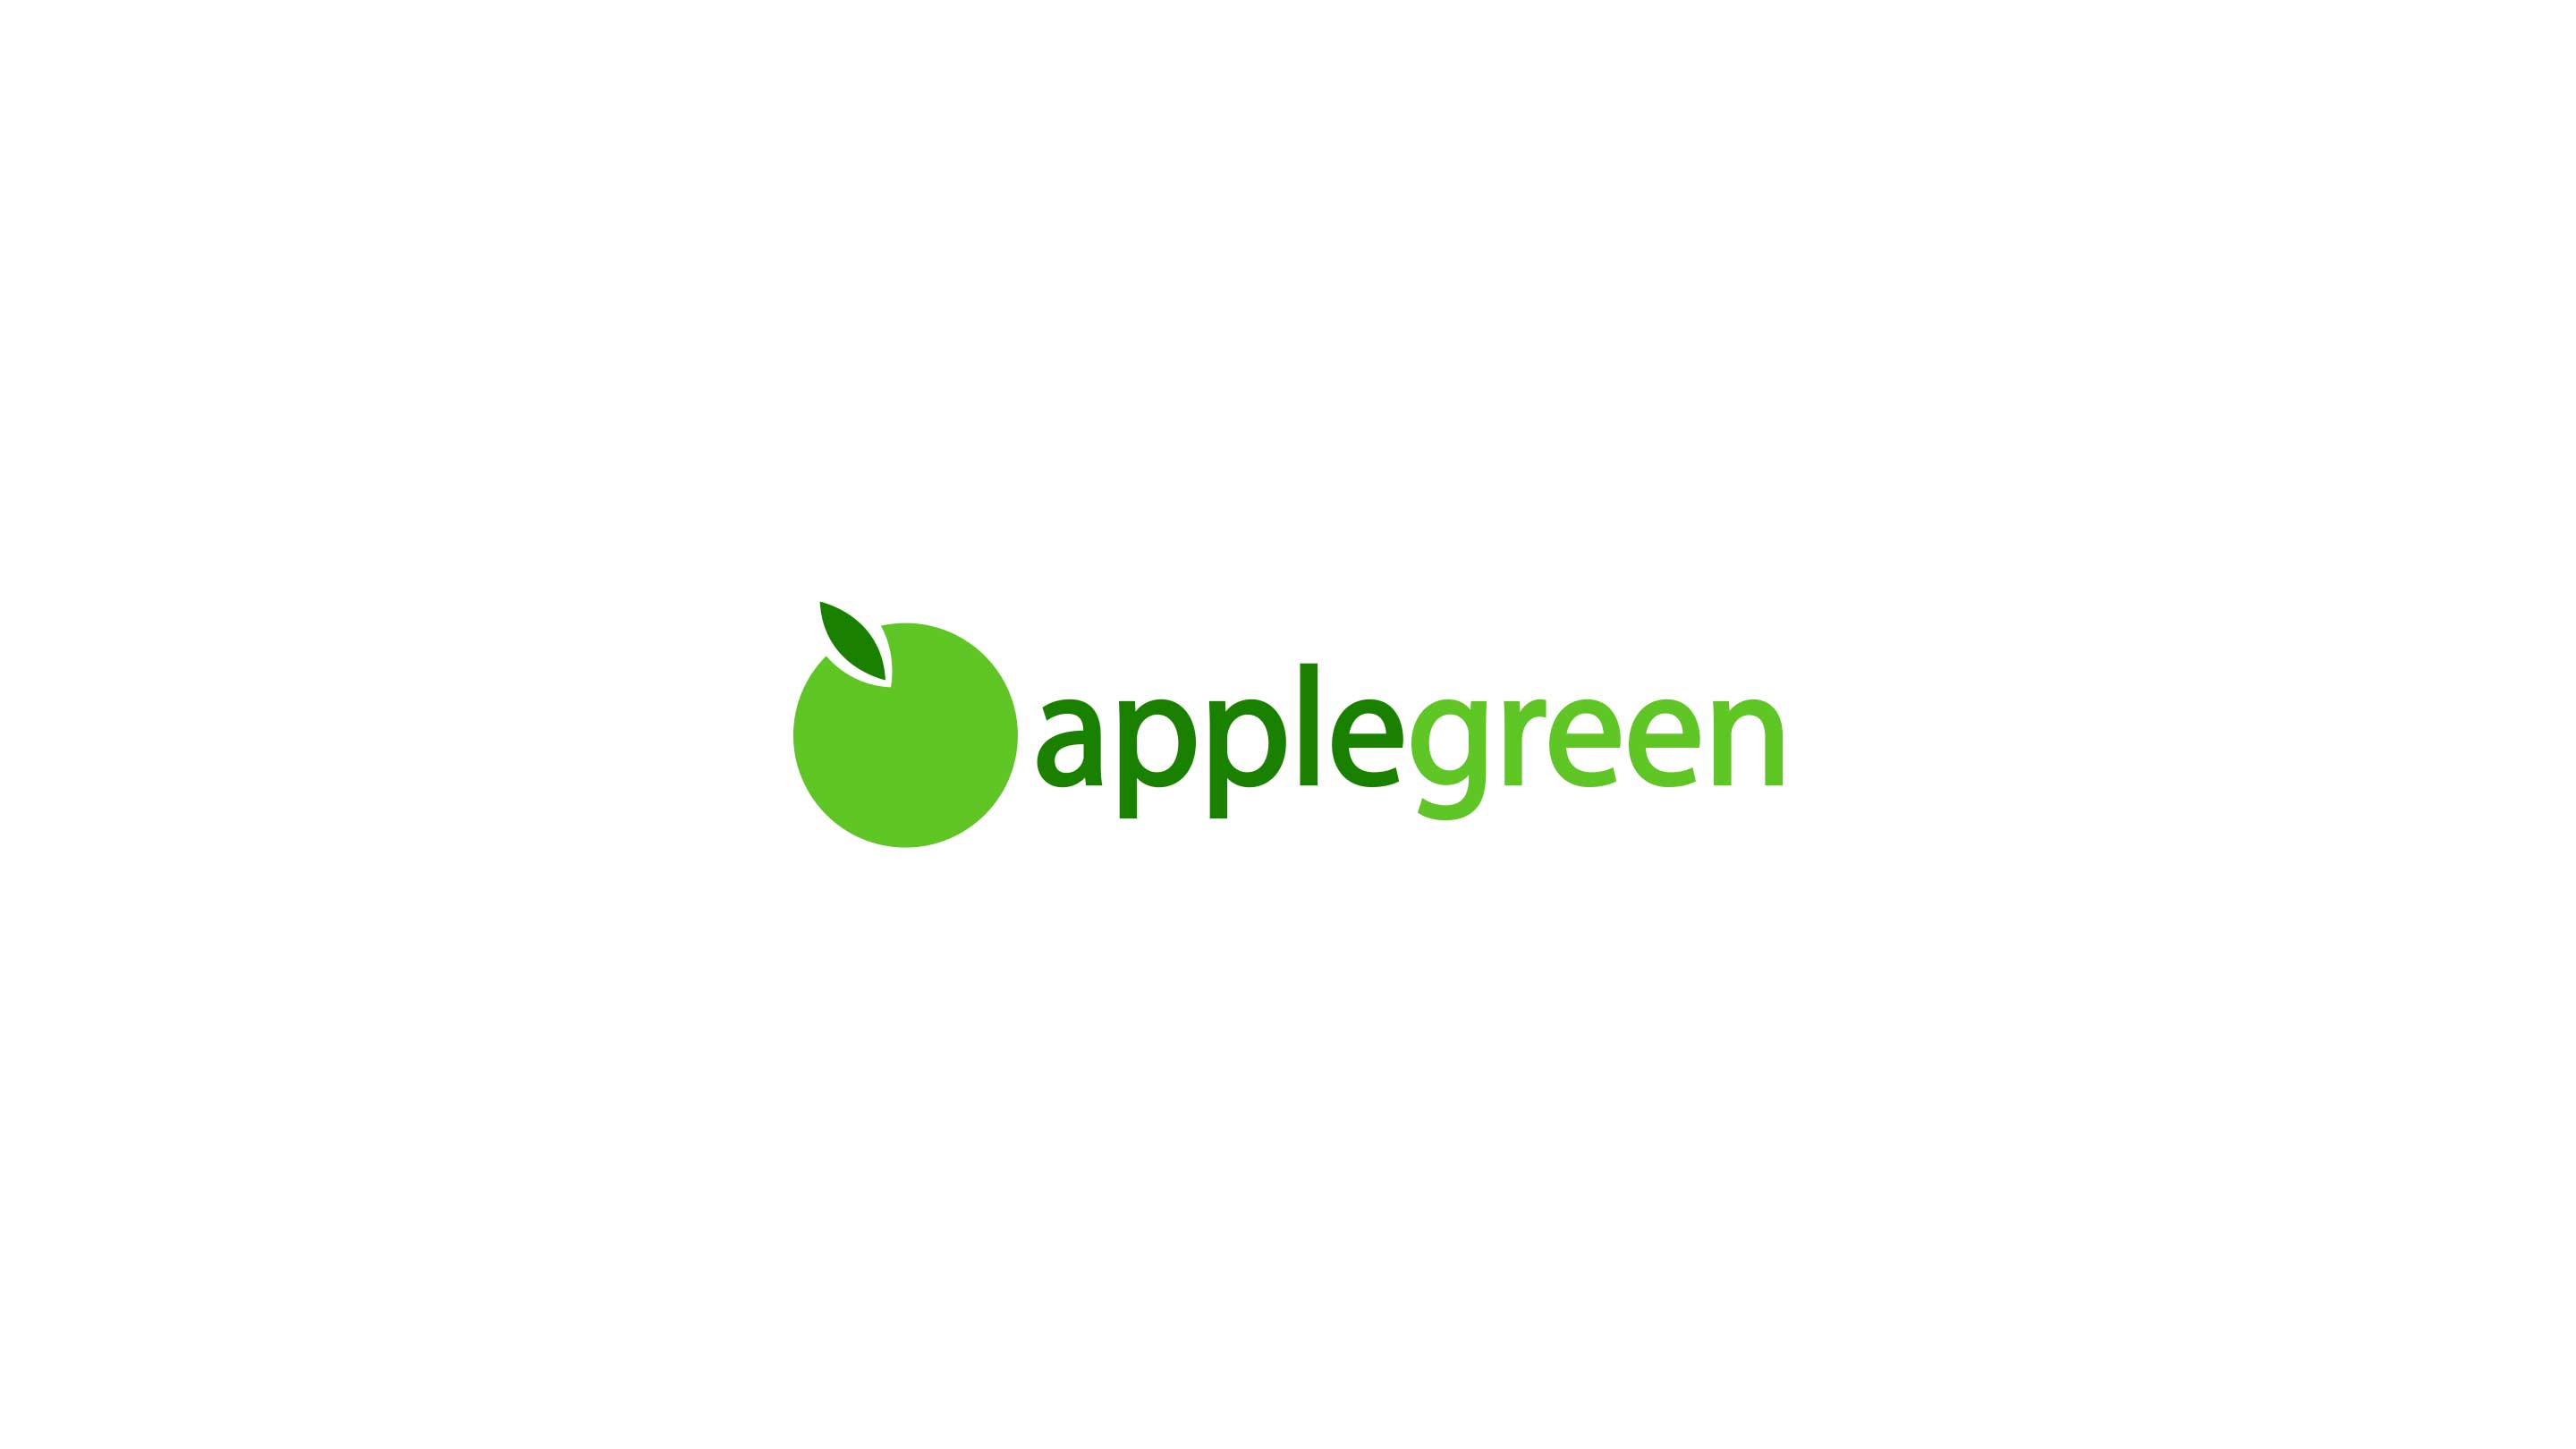 Apple Green Logo - Applegreen Ahead, Brand Identity Redesign Concept